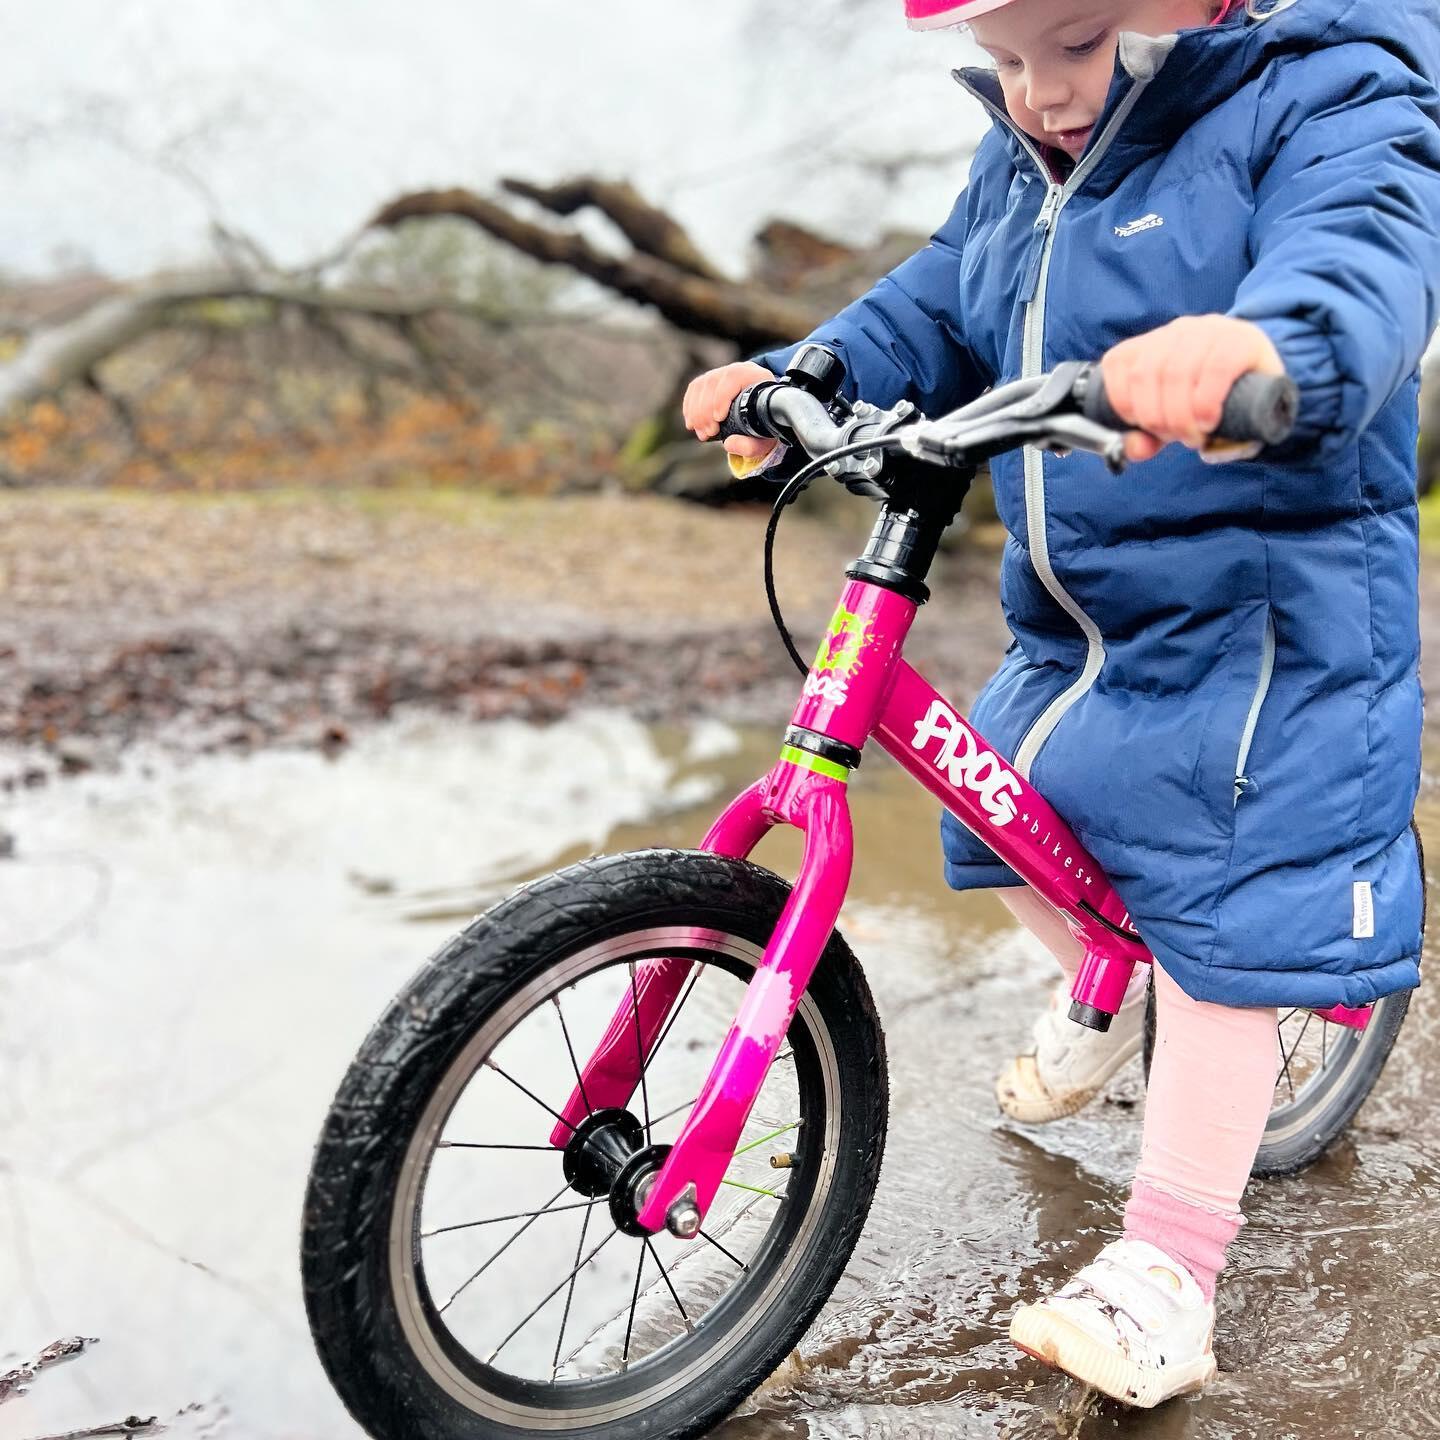 Tadpole Plus 14 Inch Lightweight Kids Balance Bike For 3-4 Years - Pink 4/6